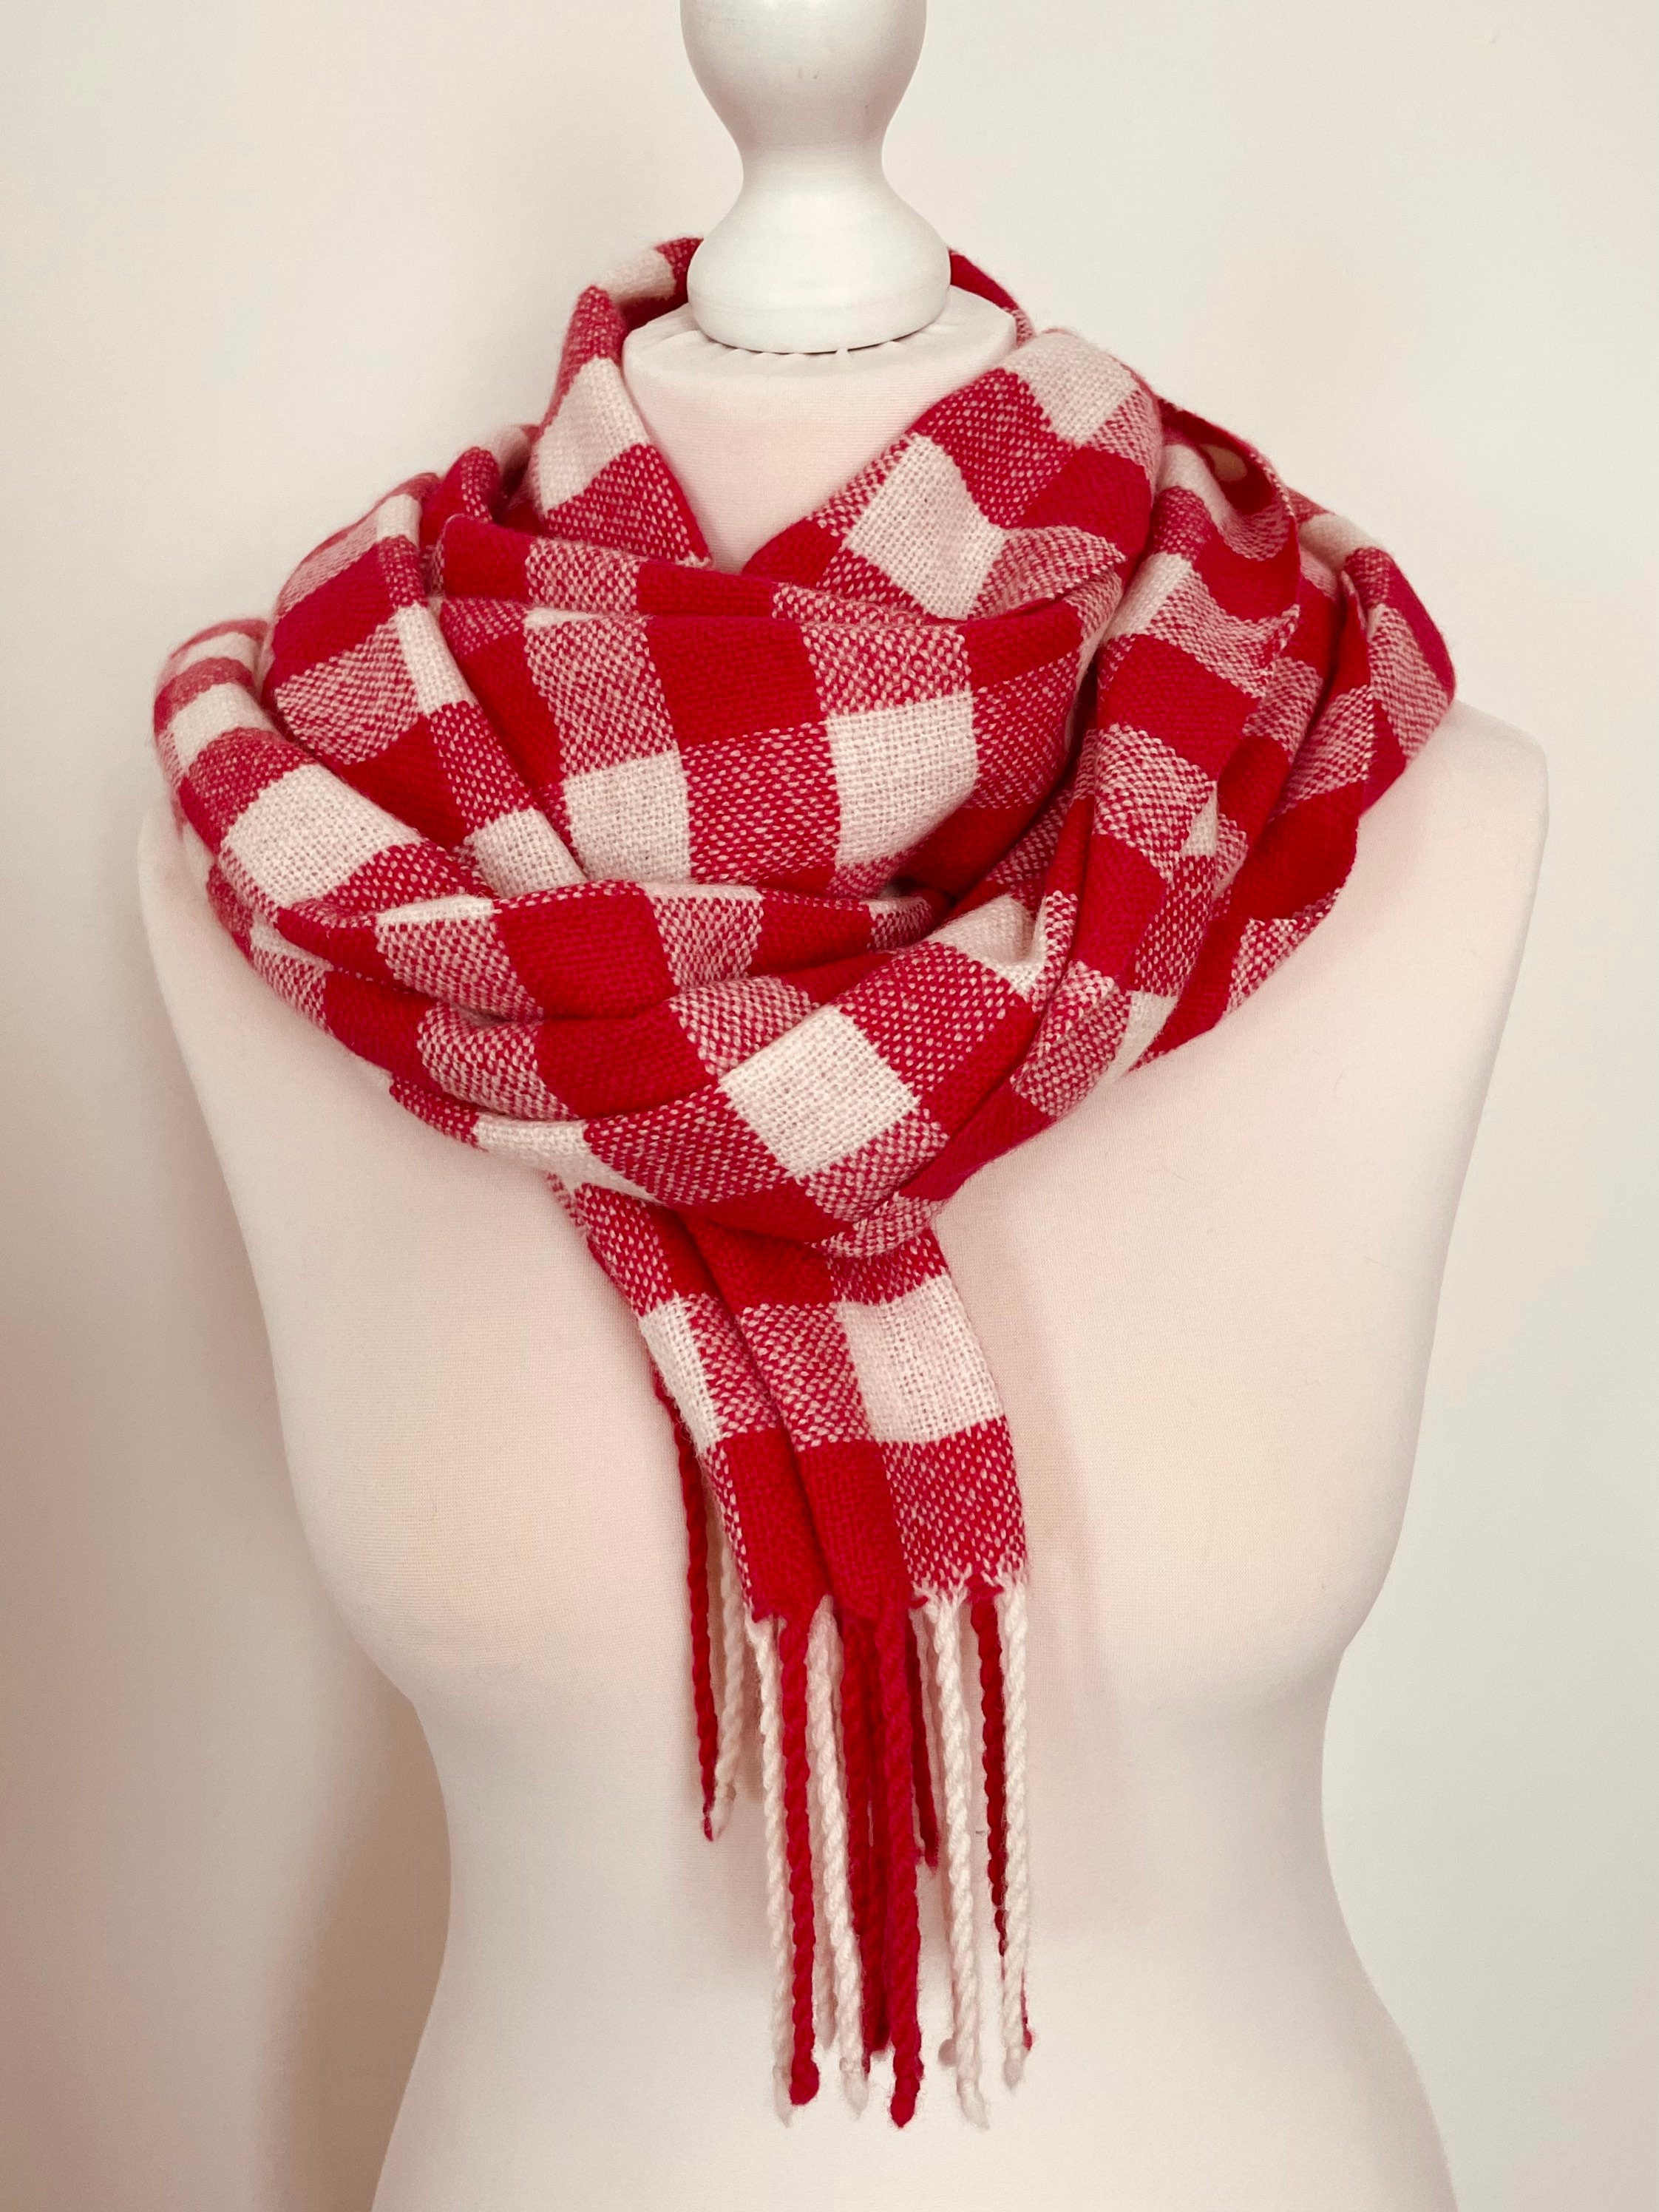 Handwoven raspberry pink lambswool gingham scarf.